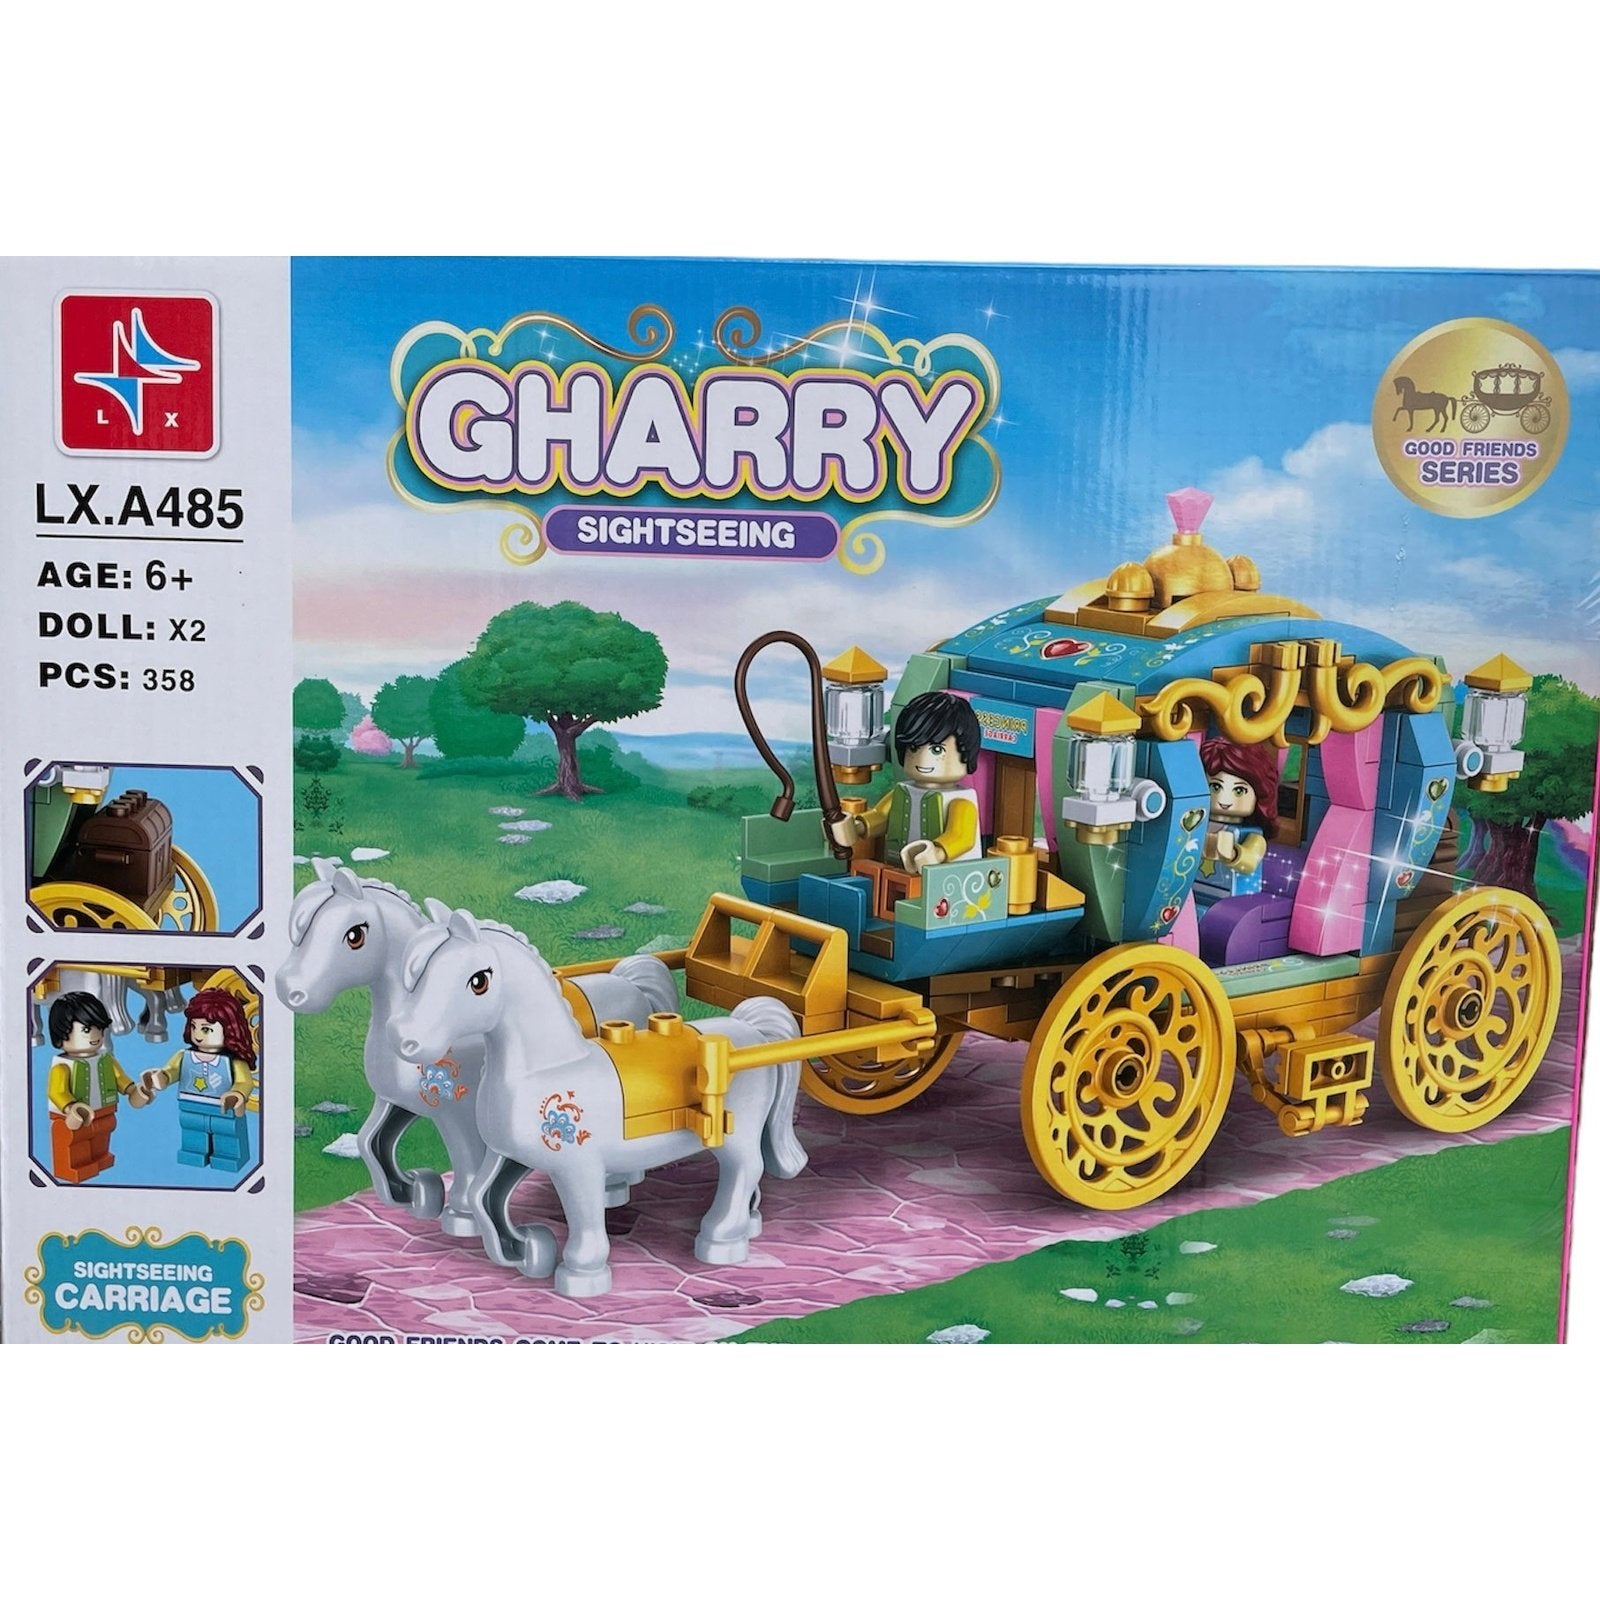 Gharry Sightseeing Carriage LXA485 Block Set  Fun Toy For Kids - kidzbuzzz